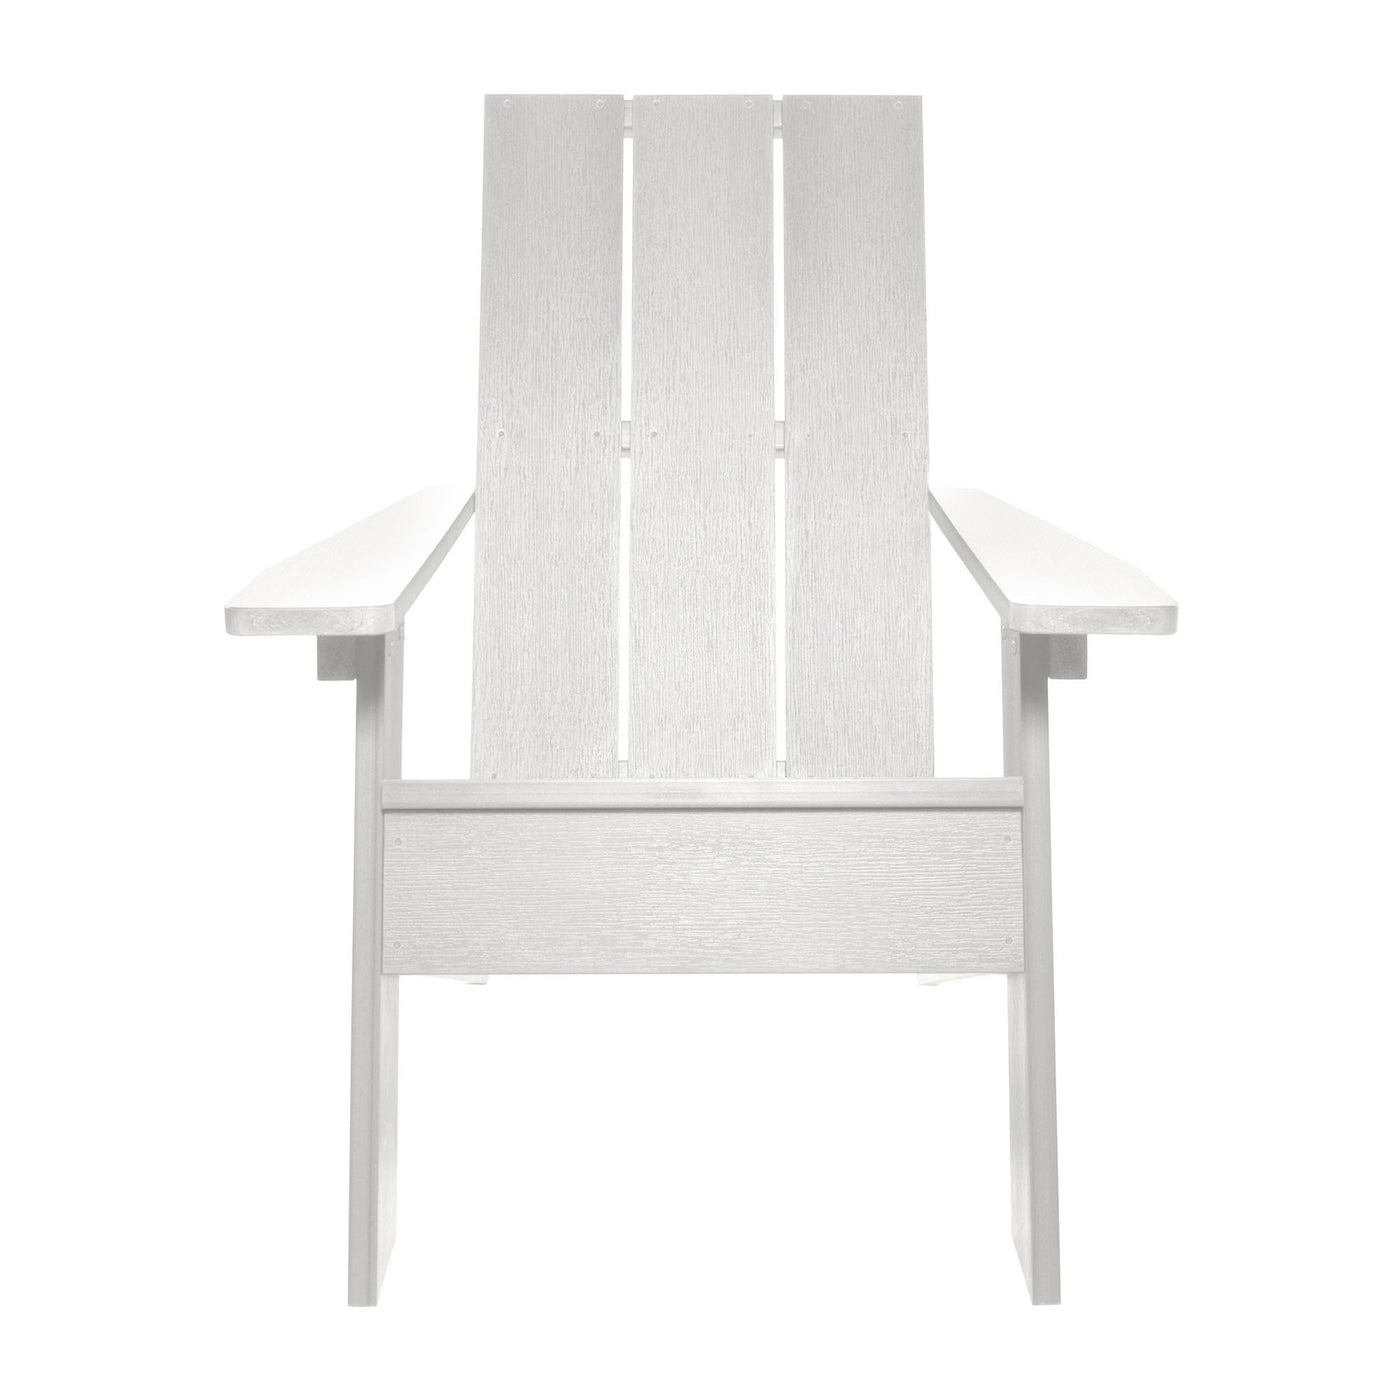 Italica Modern Adirondack chair in White